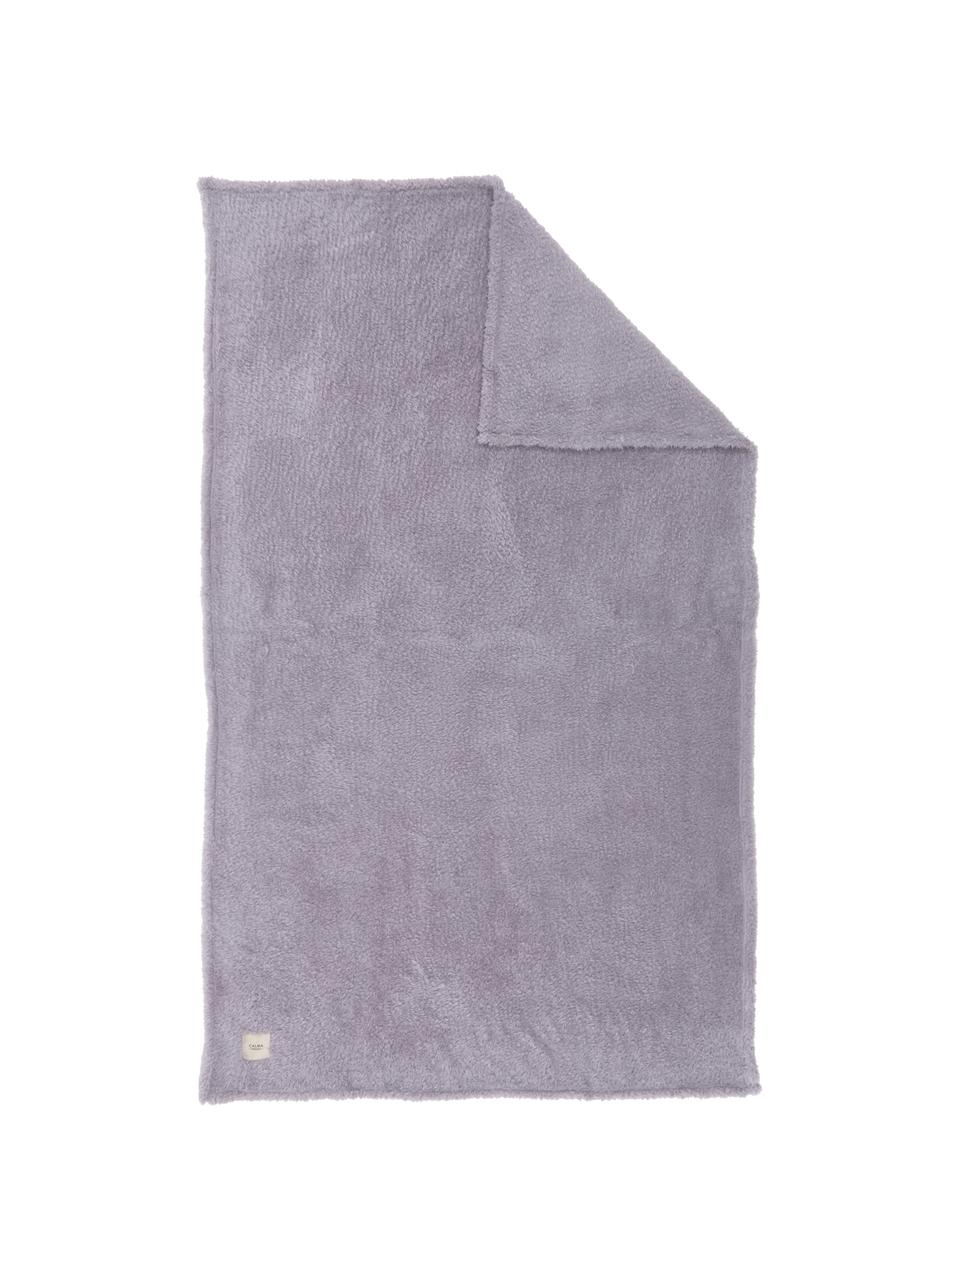 Zachte plaid Tedy in lila, 100% polyester, Lila, B 120 x L 180 cm